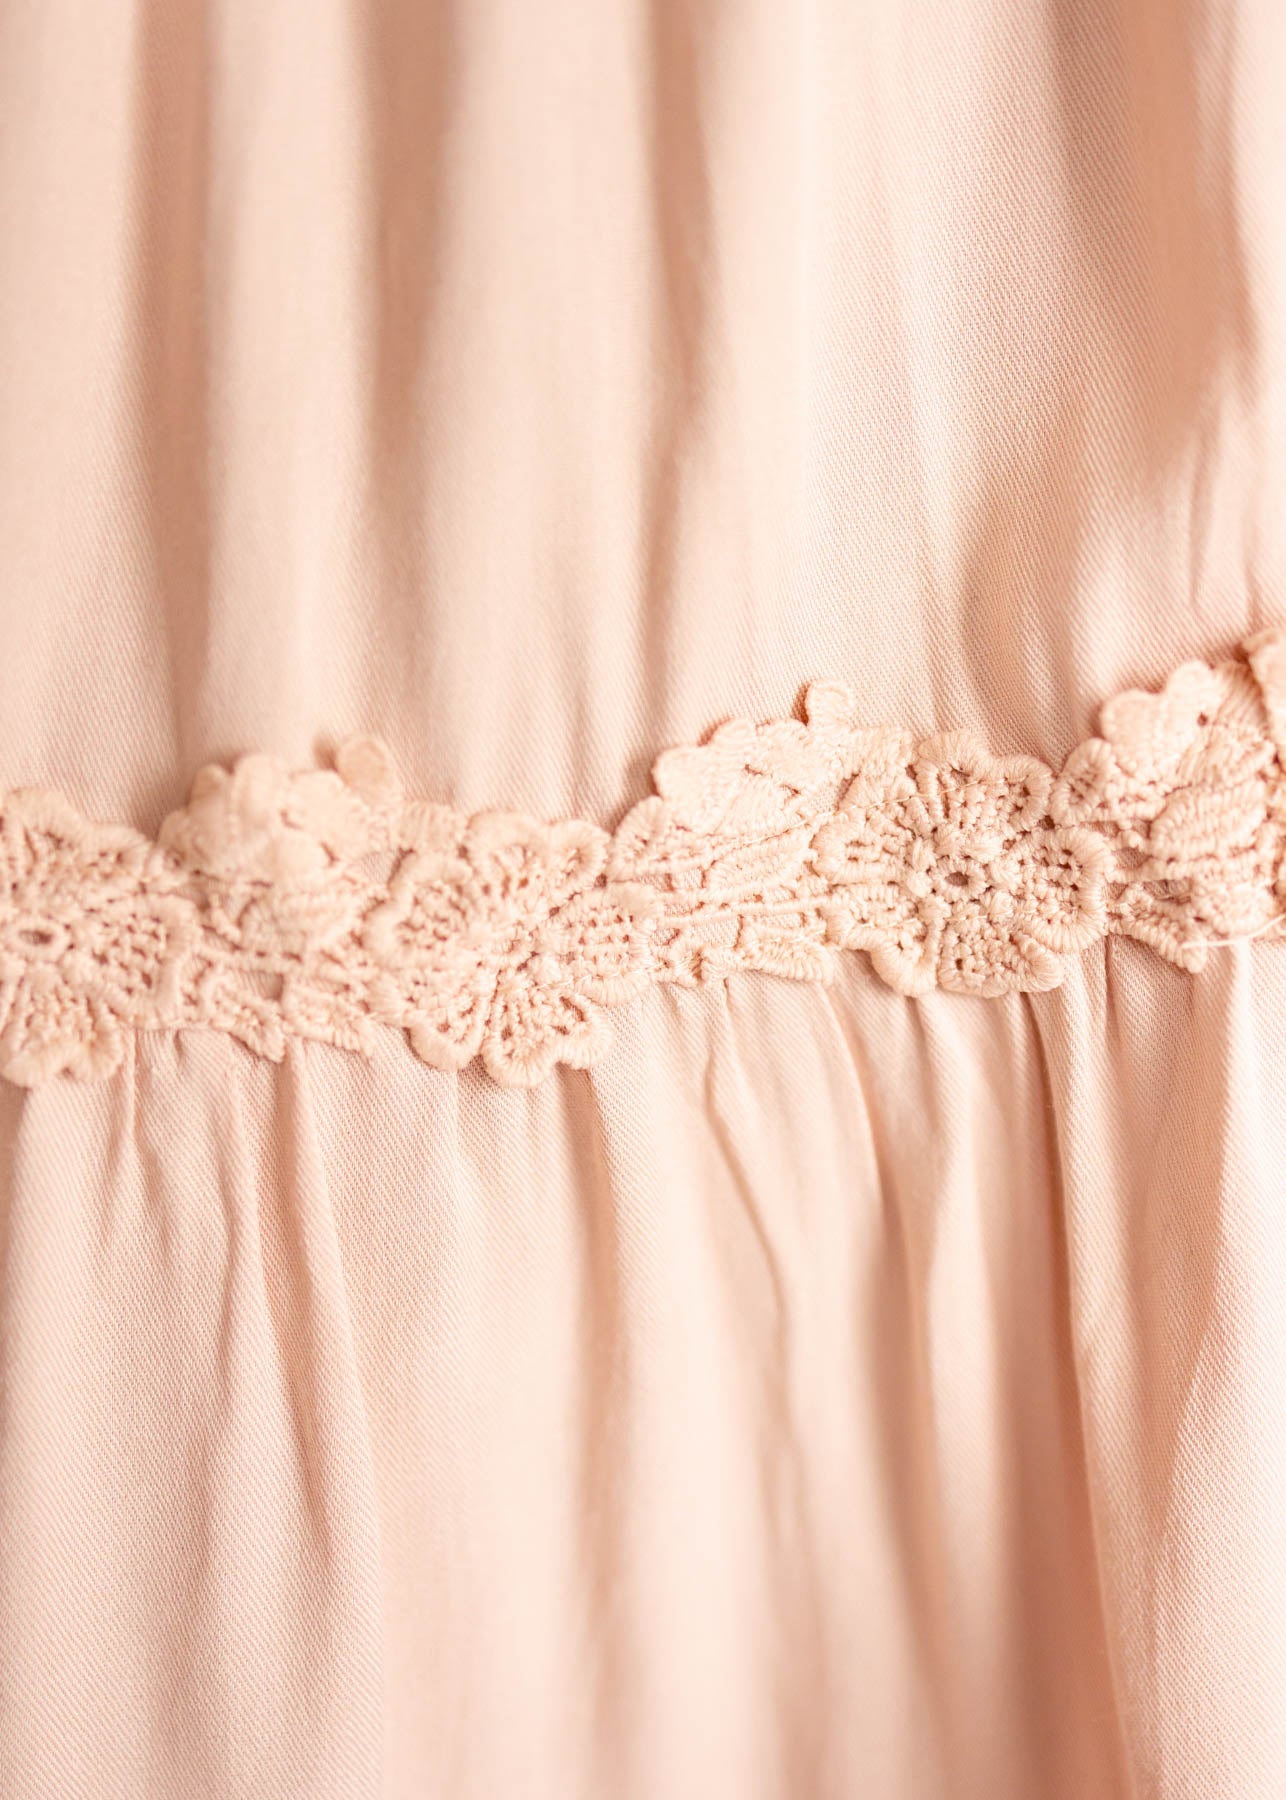 Lace trim on a blush dress